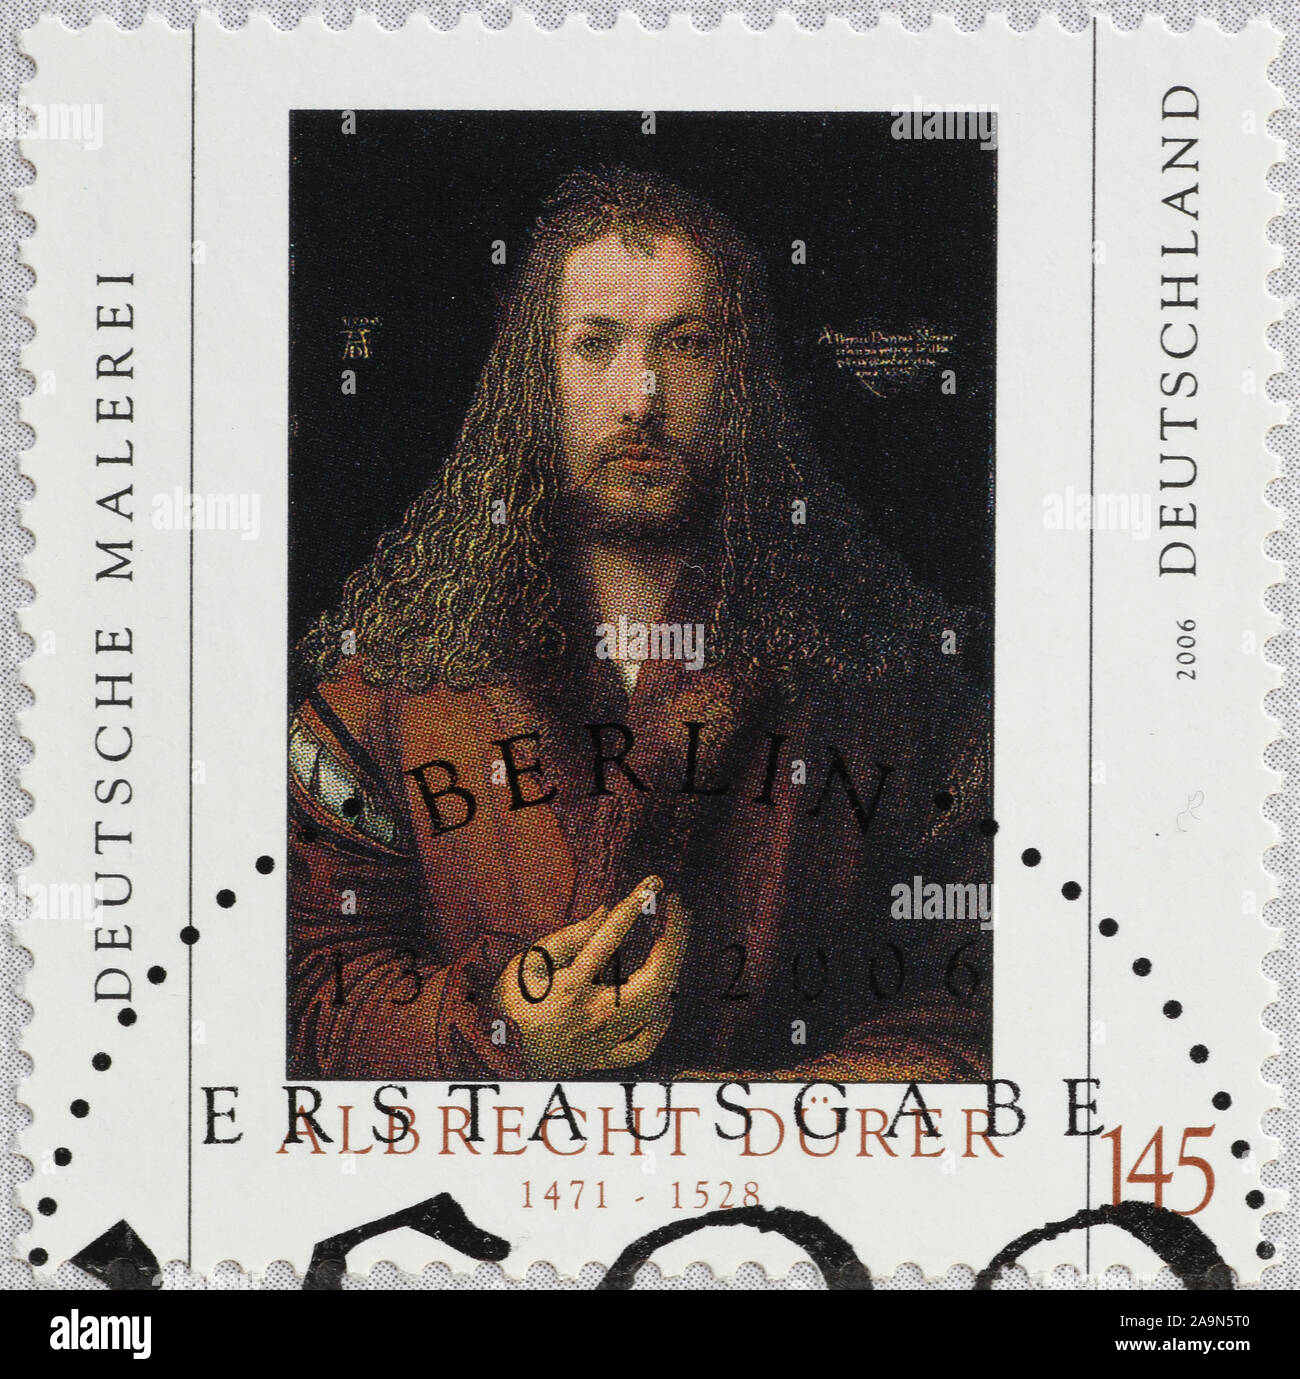 Self-portrait by Albrecht Durer on german stamp Stock Photo